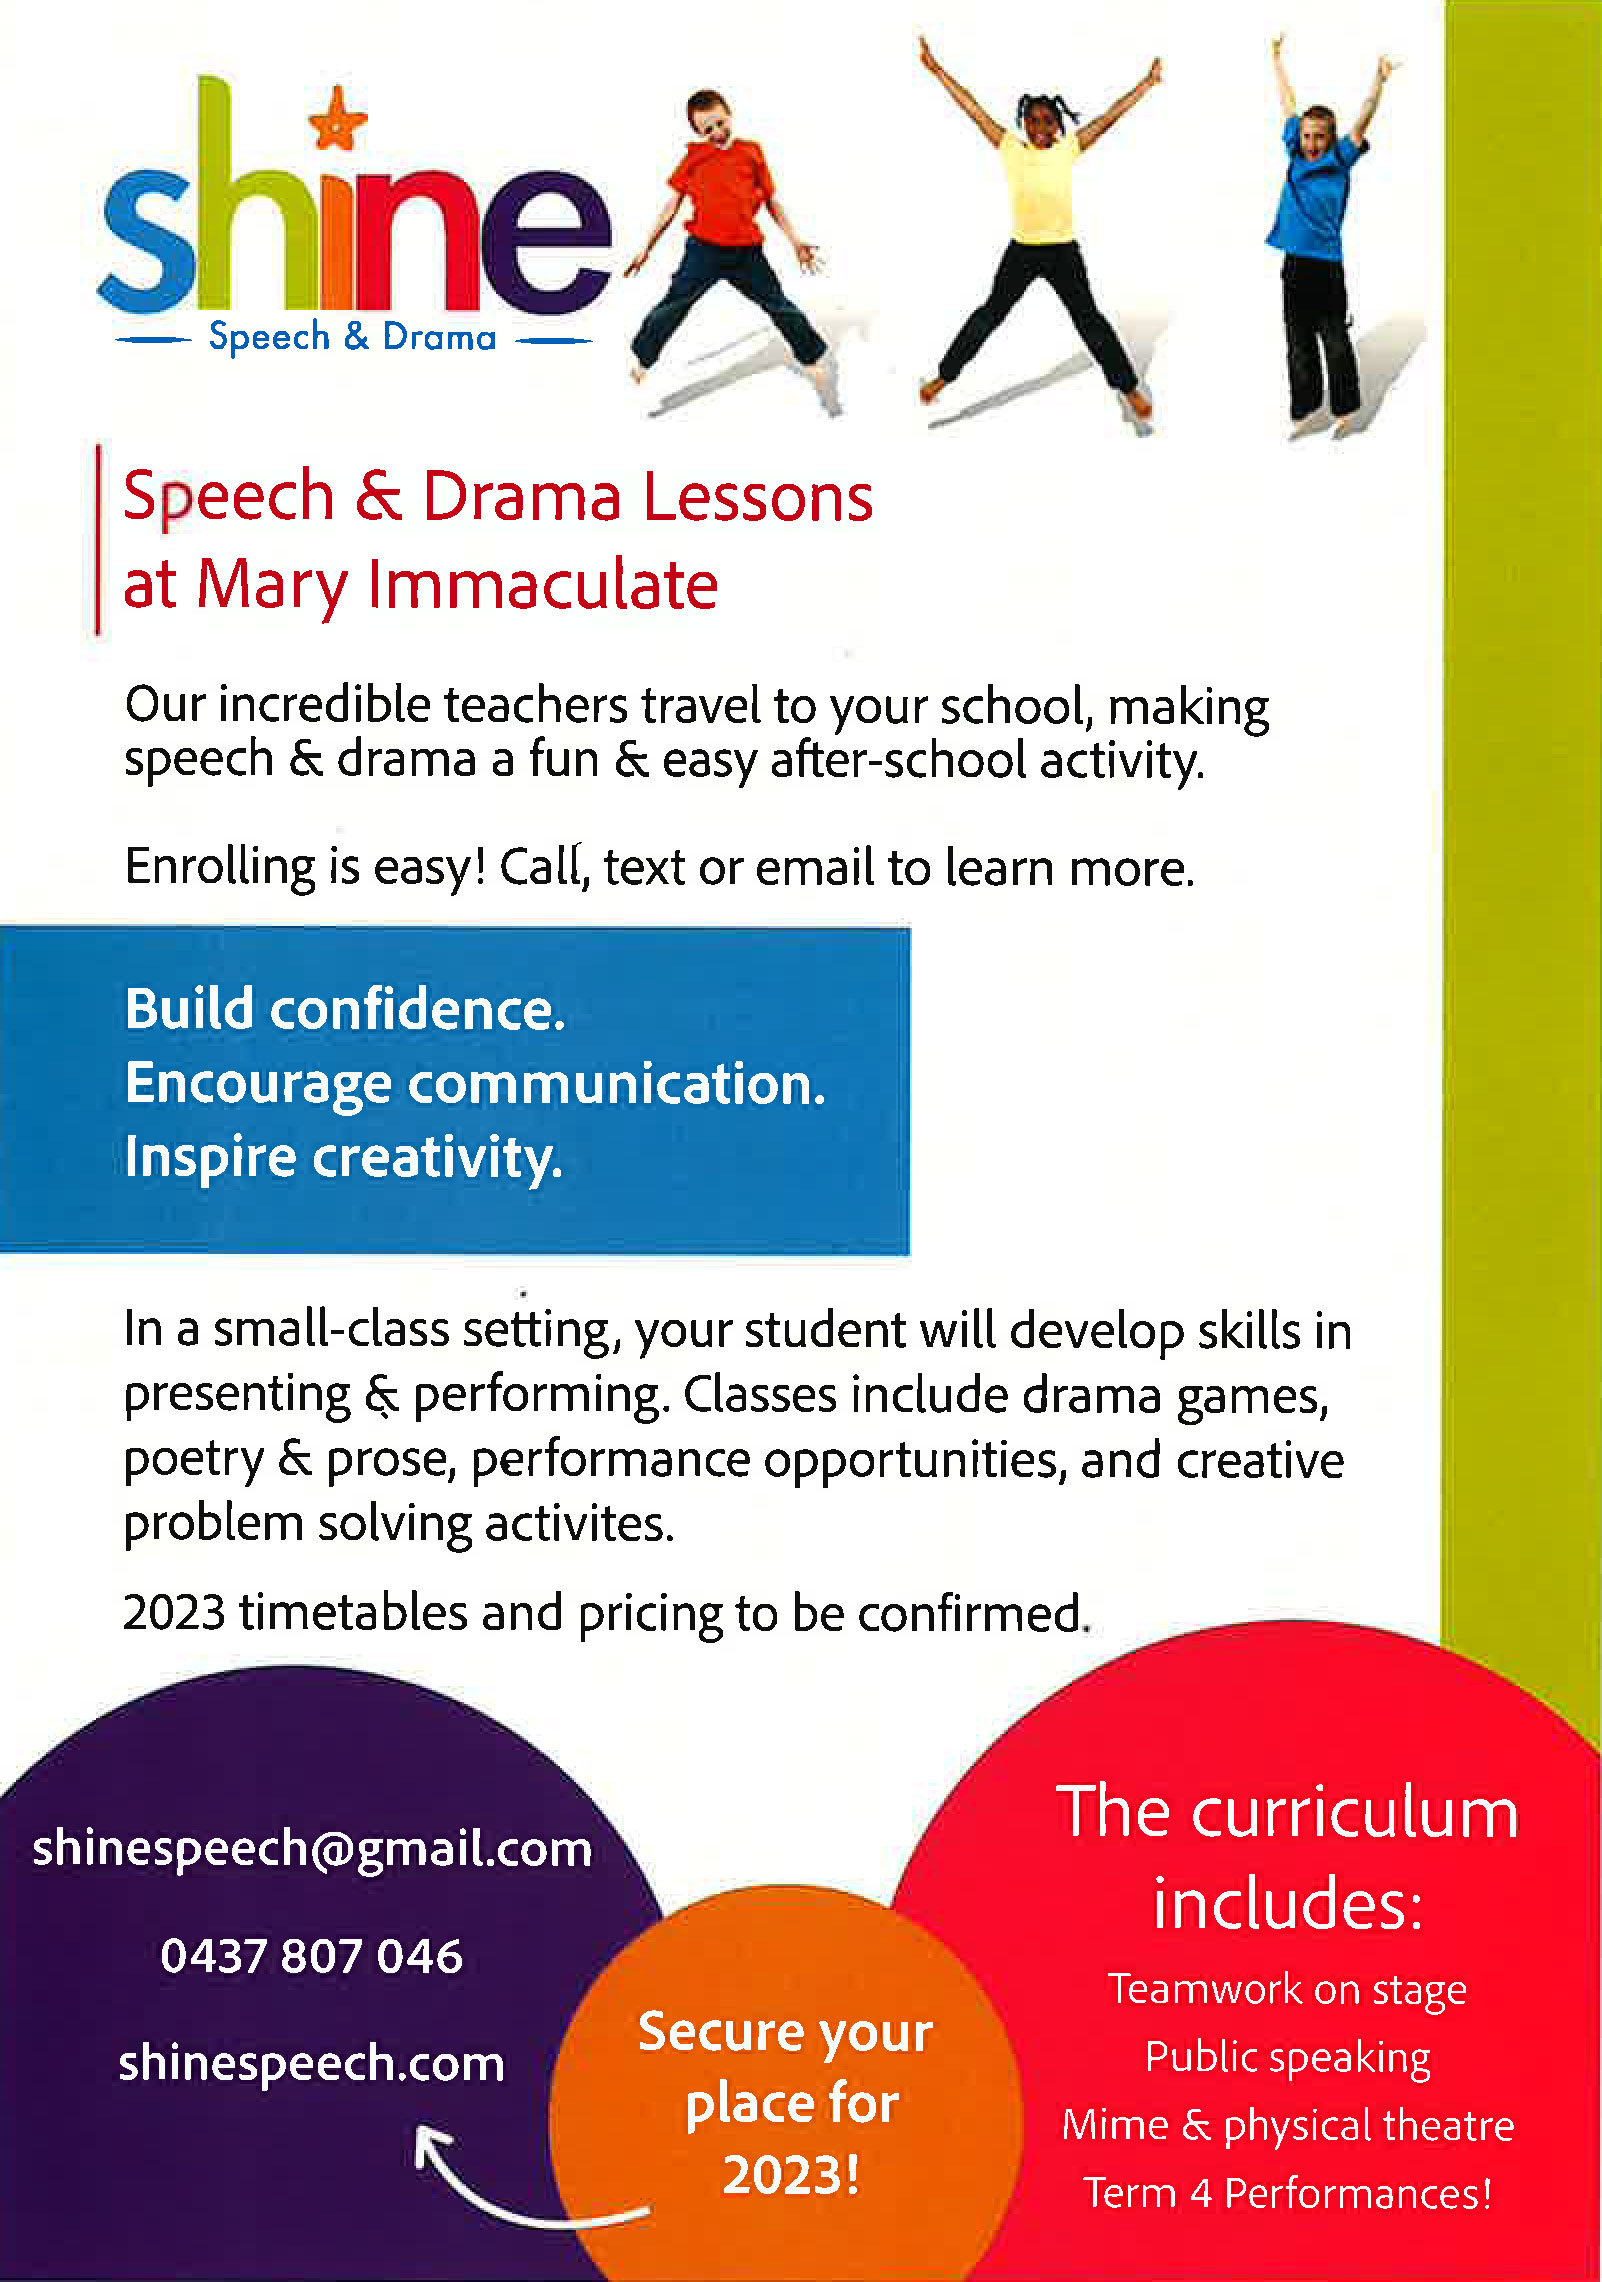 Shine-Speech-&-Drama-flyer.jpg